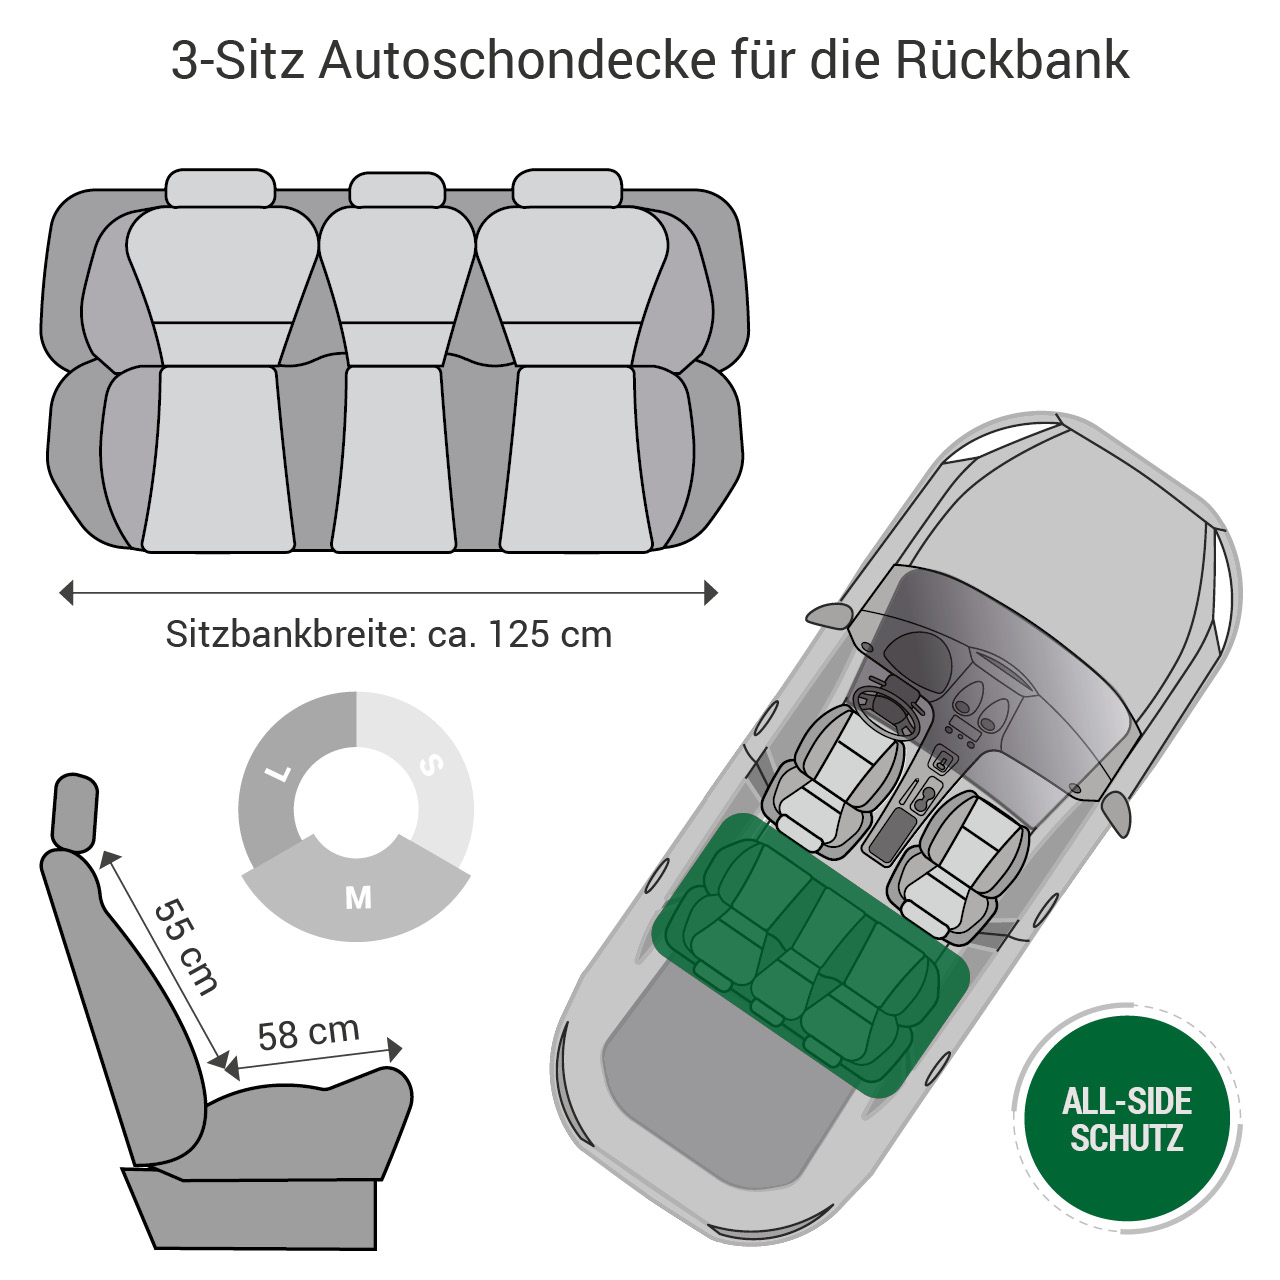 Doctor Bark - Autoschondecke für Hunde - Rückbank 3-Sitz Gr. M - braun